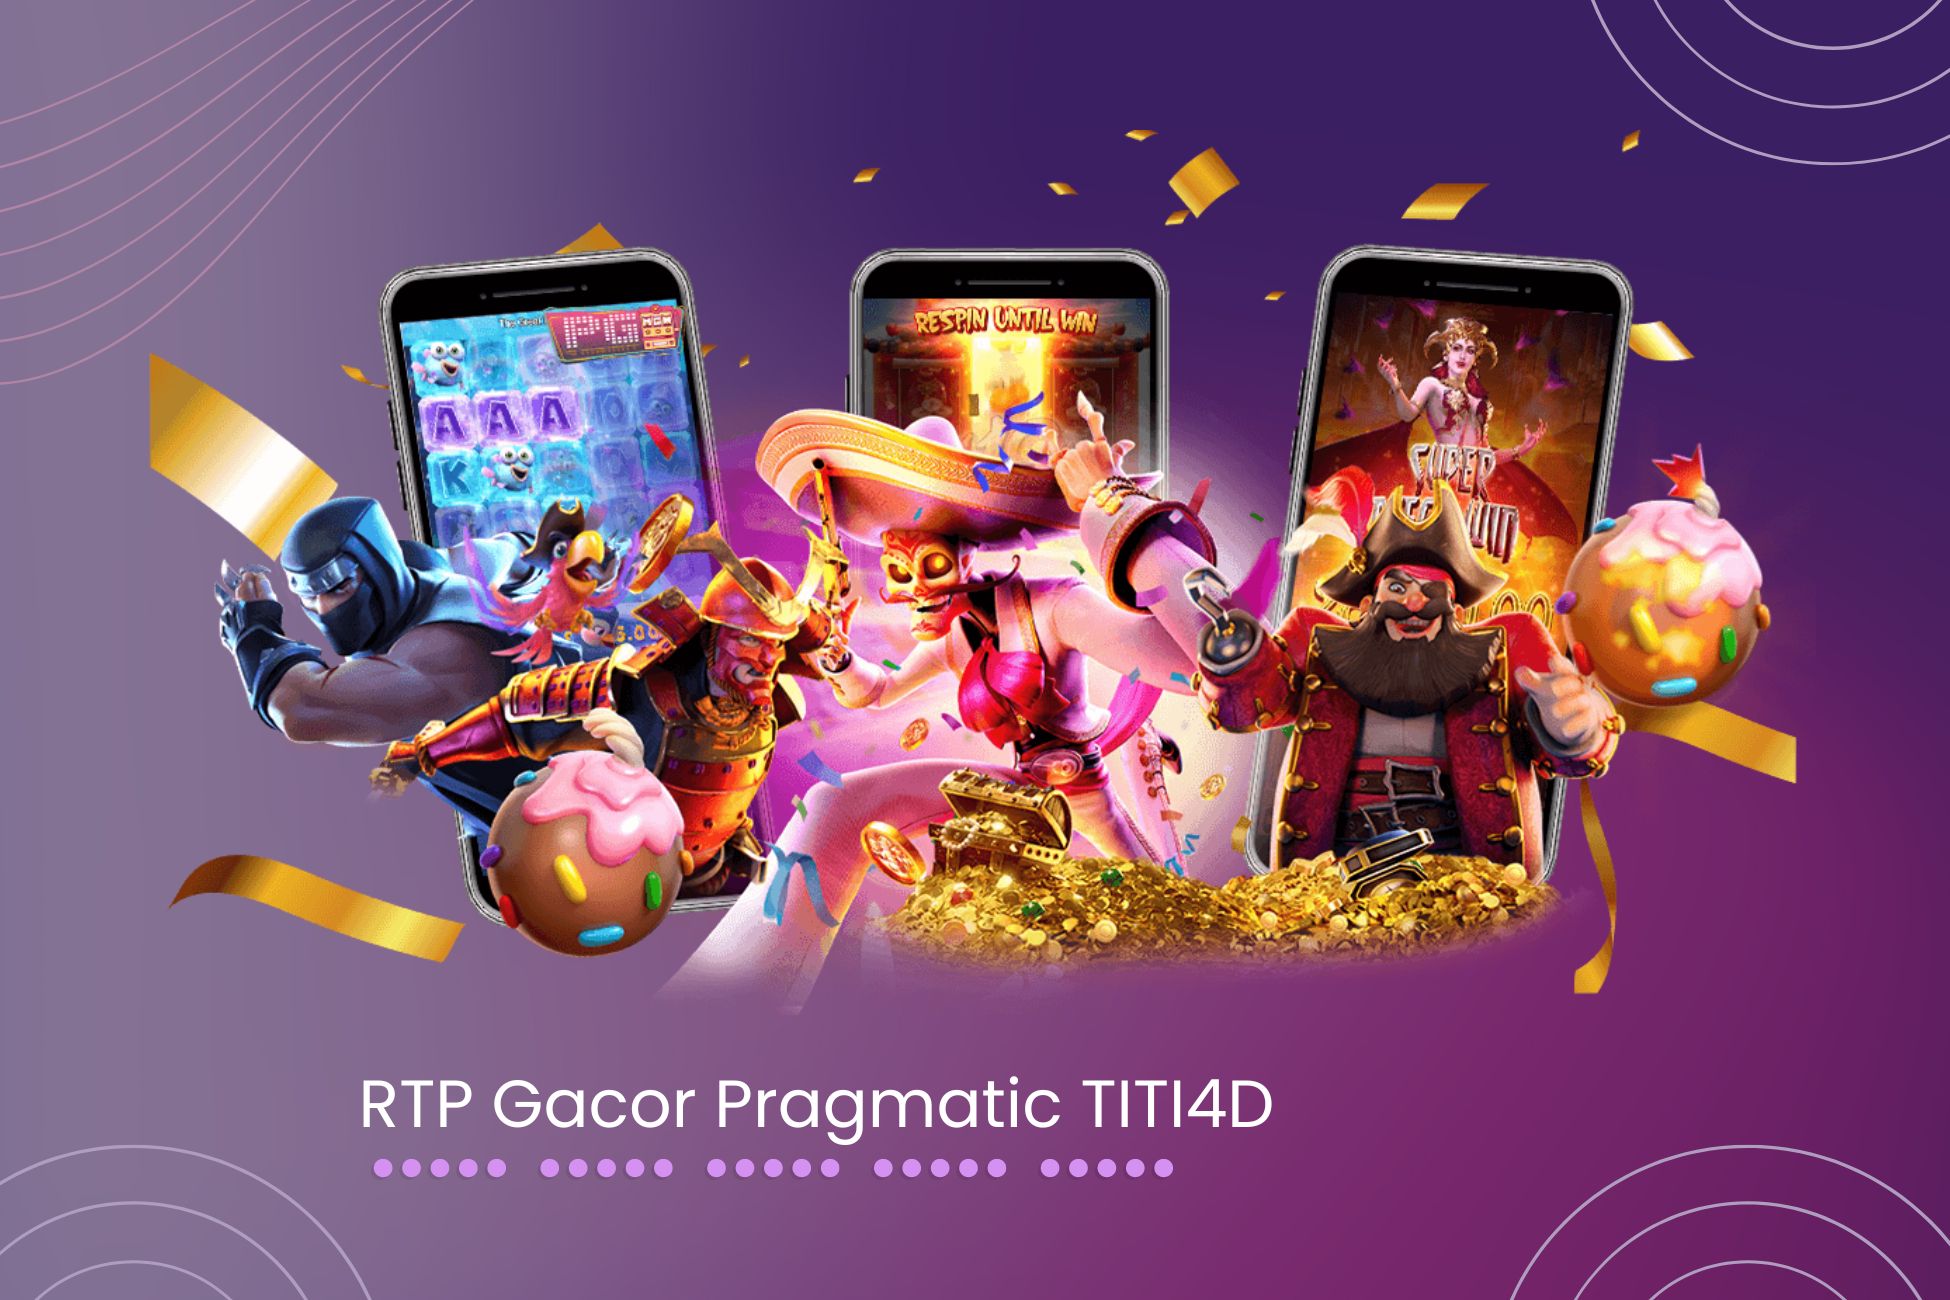 RTP Gacor Pragmatic TITI4D